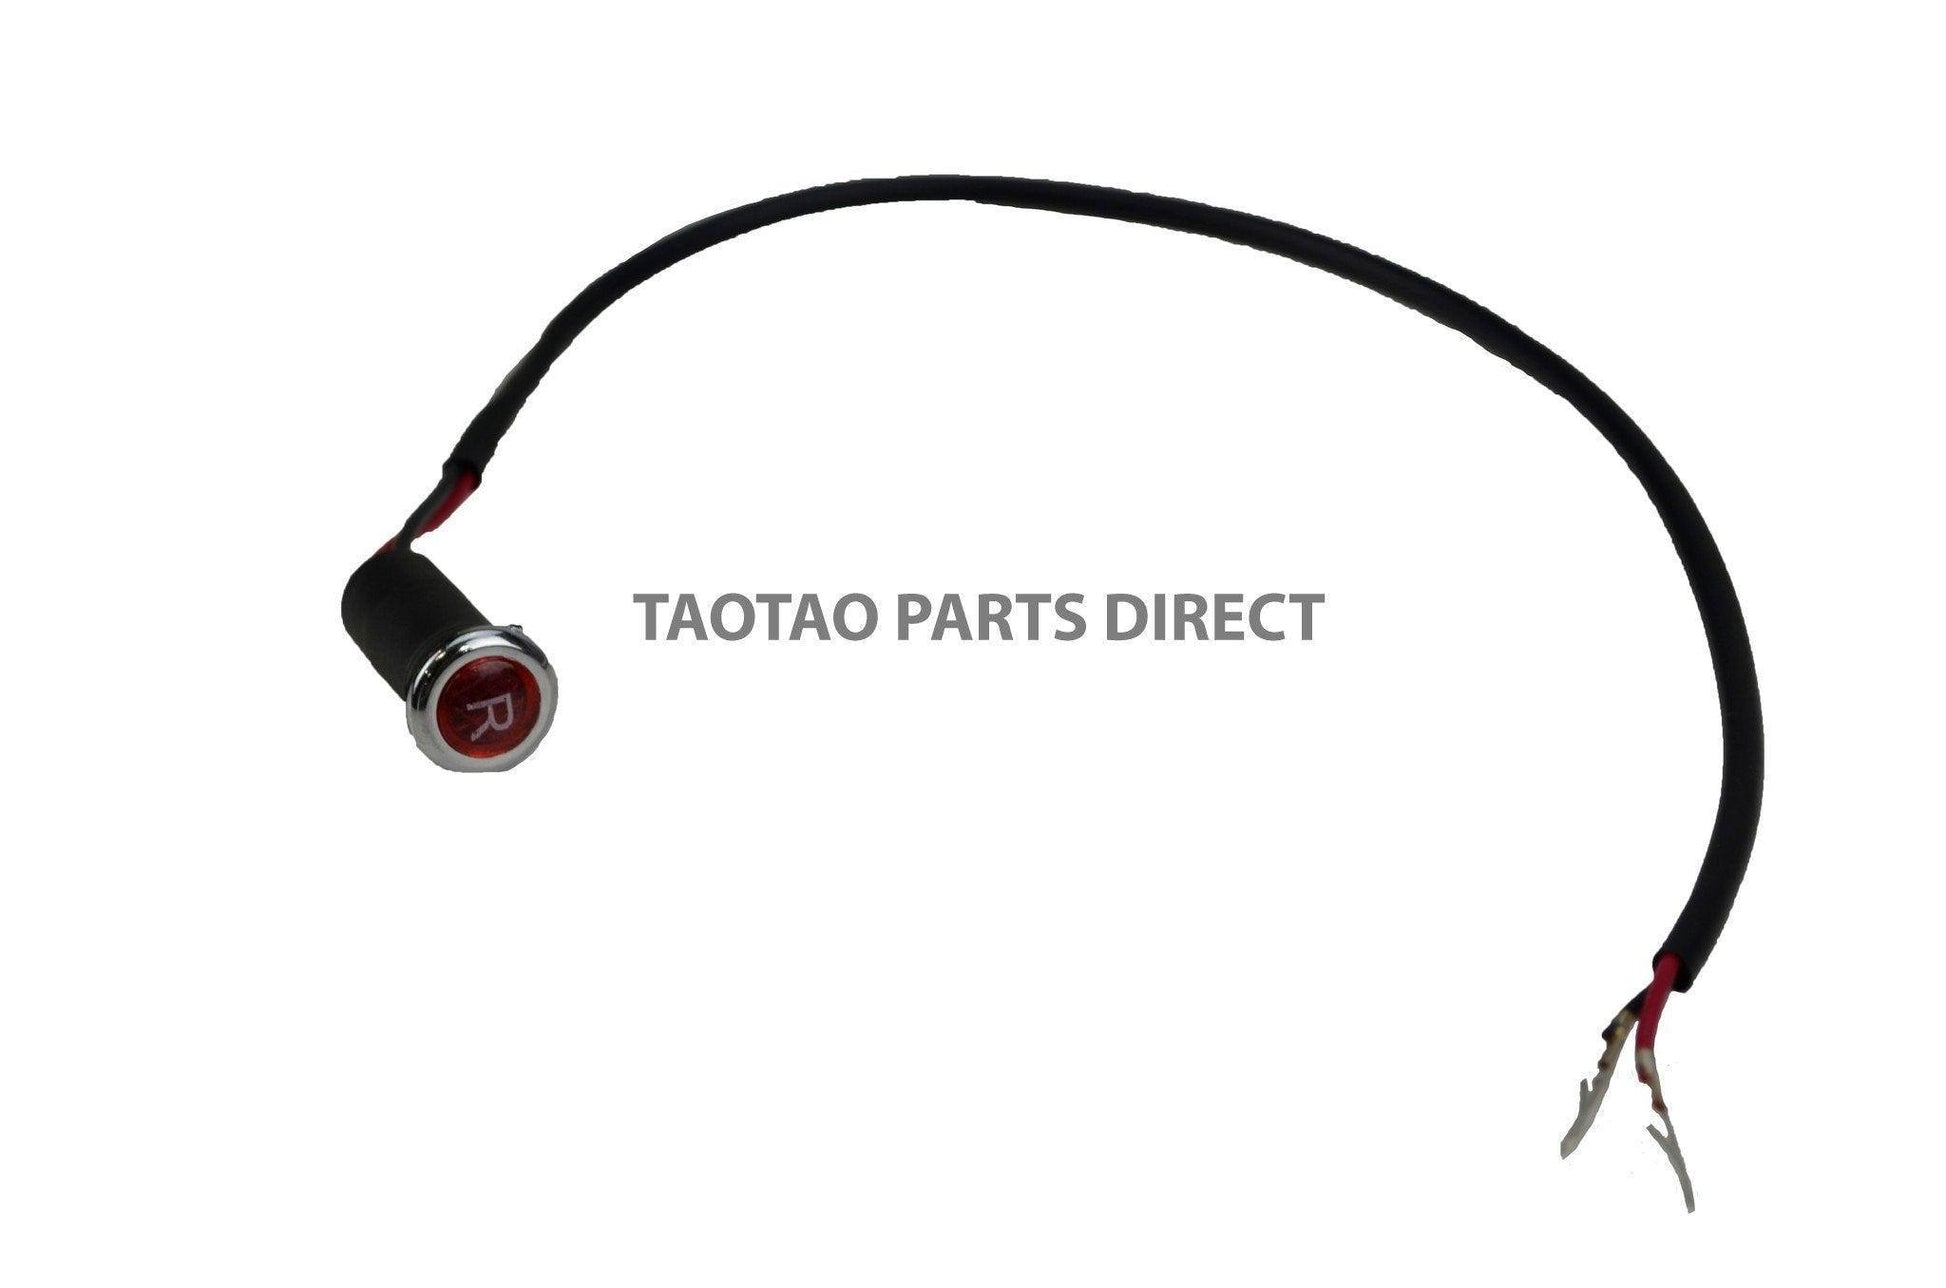 Reverse Indicator Light - TaoTao Parts Direct